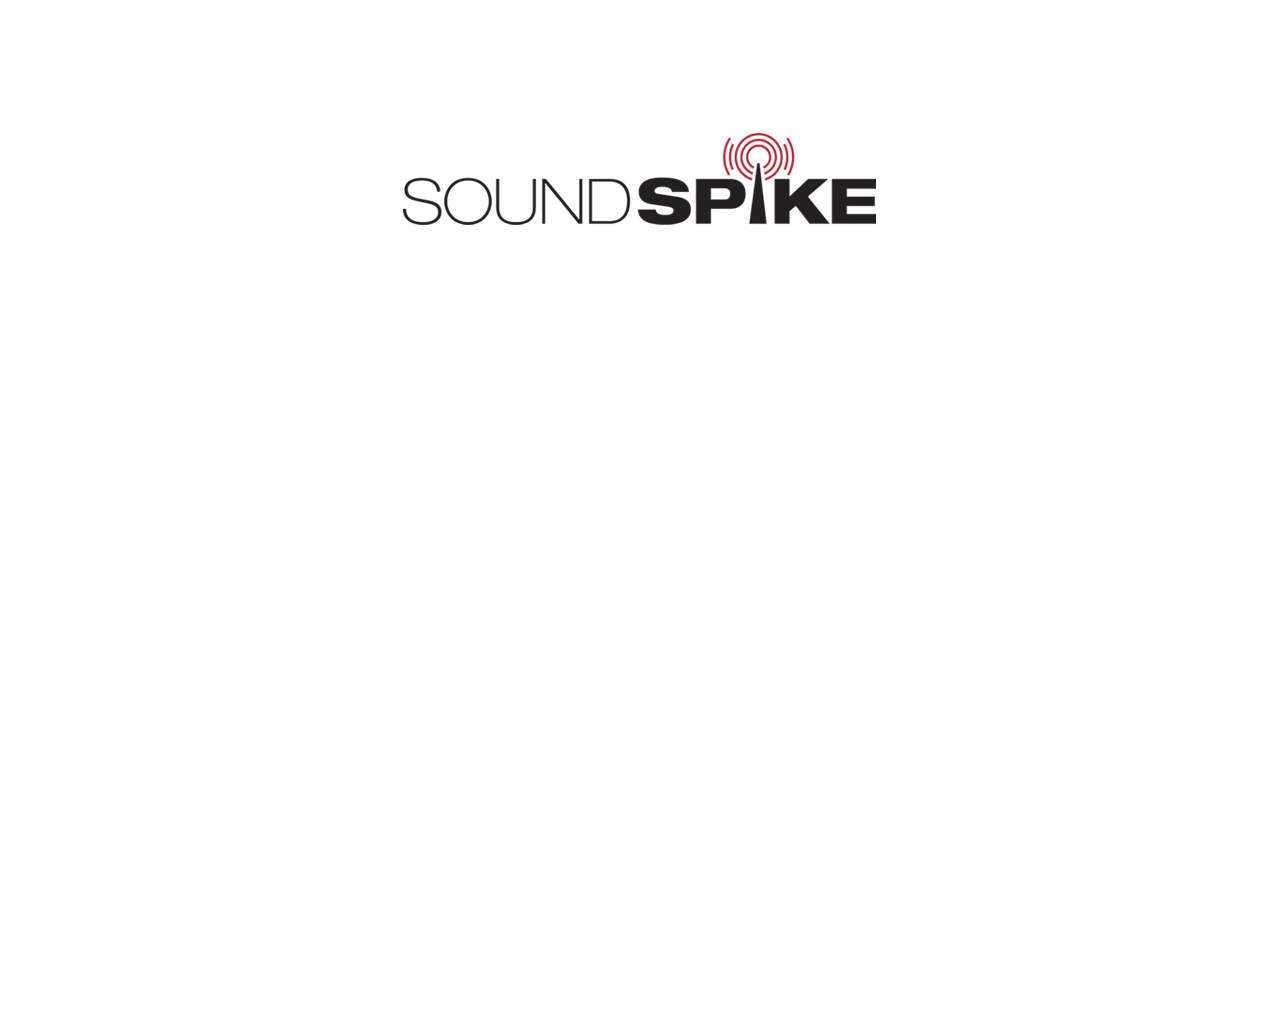 soundspike.com